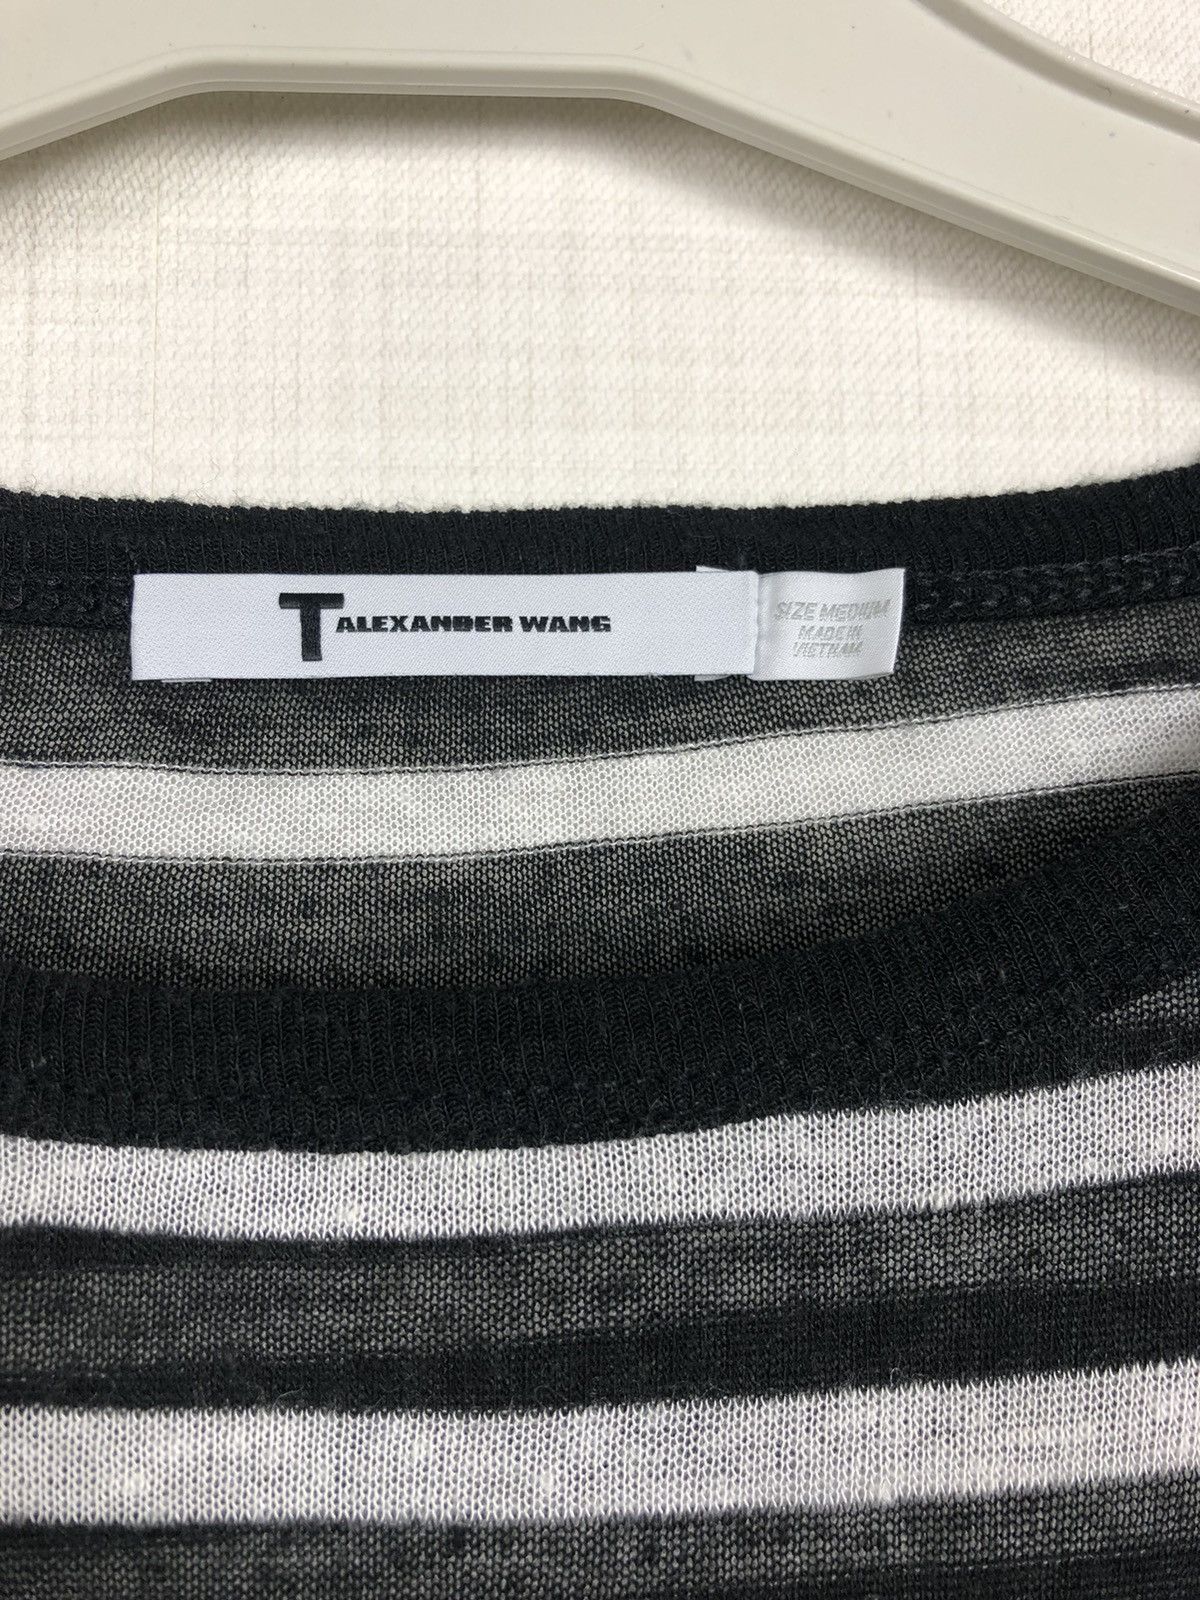 Rare T Alexander Wang Striped Sweater Long Sleeve ThIn Black Logo Size US M / EU 48-50 / 2 - 5 Thumbnail